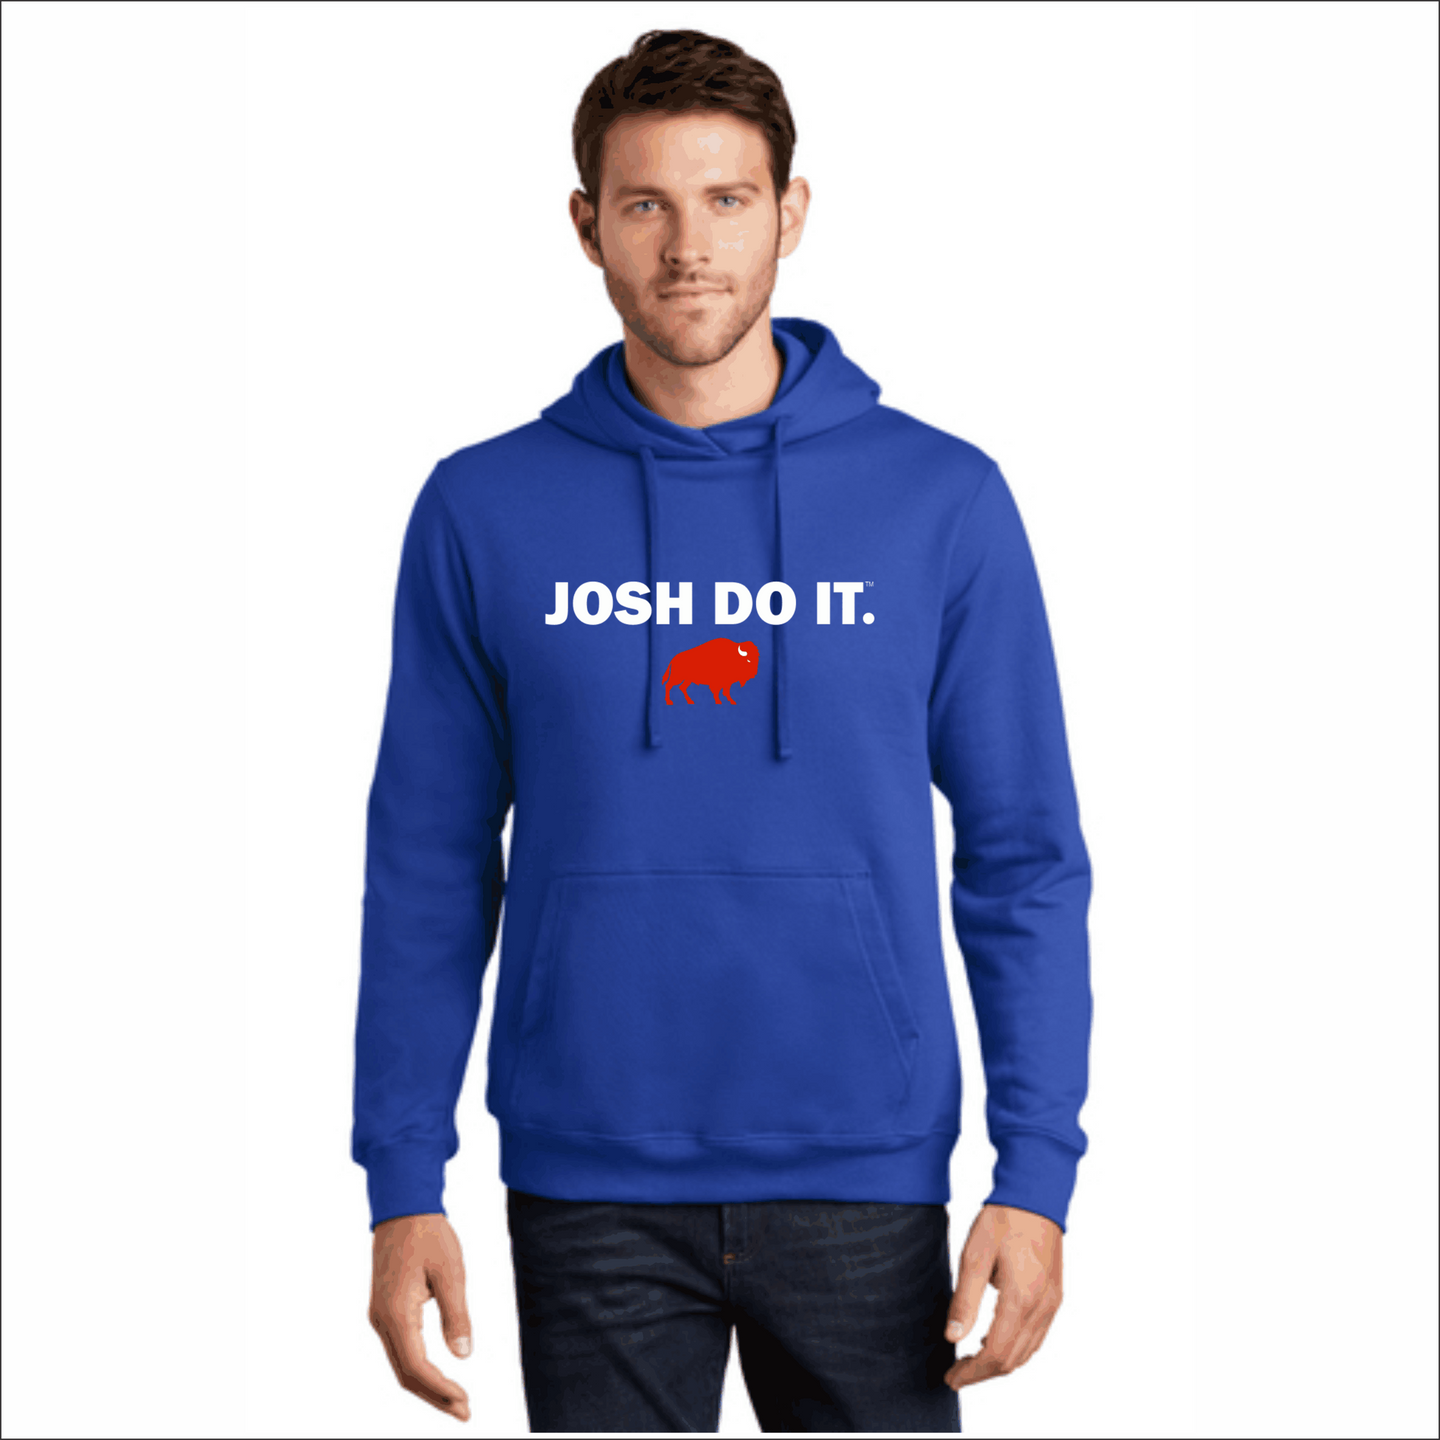 Josh Do It - Hooded Sweatshirt